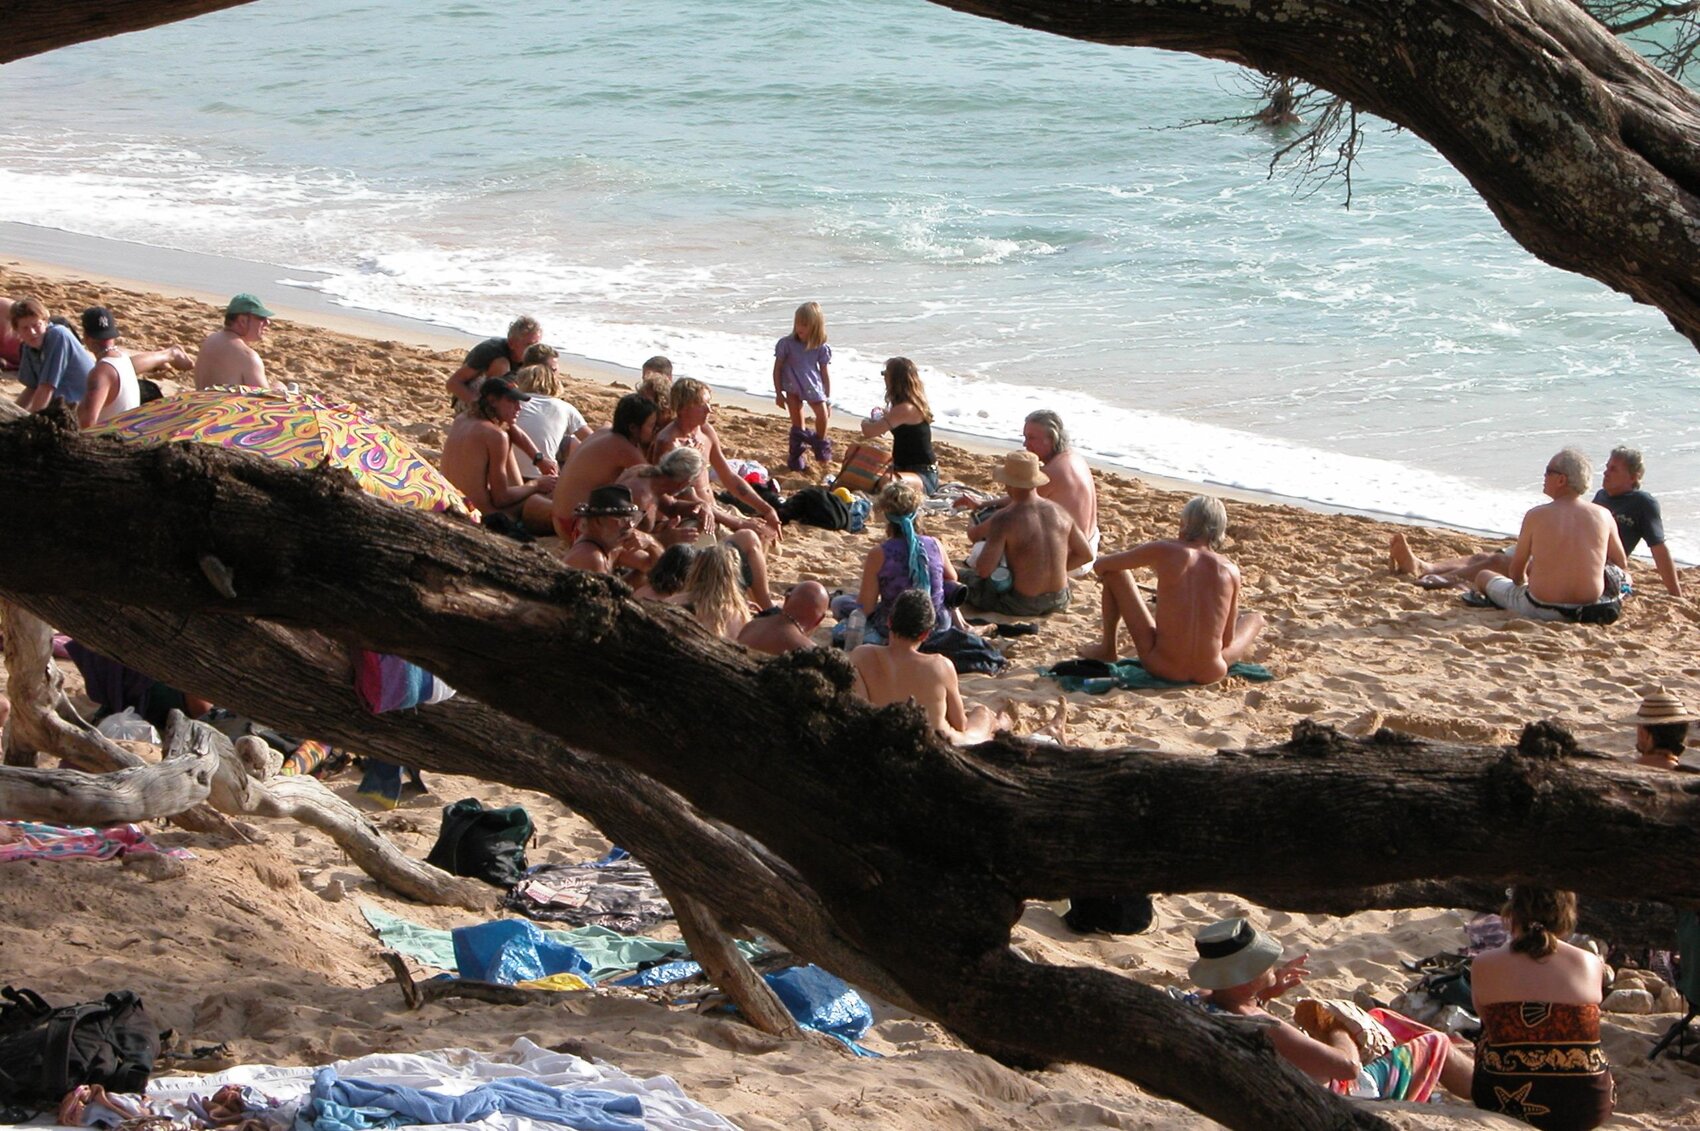 christopher schuette recommends Little Beach Party Maui